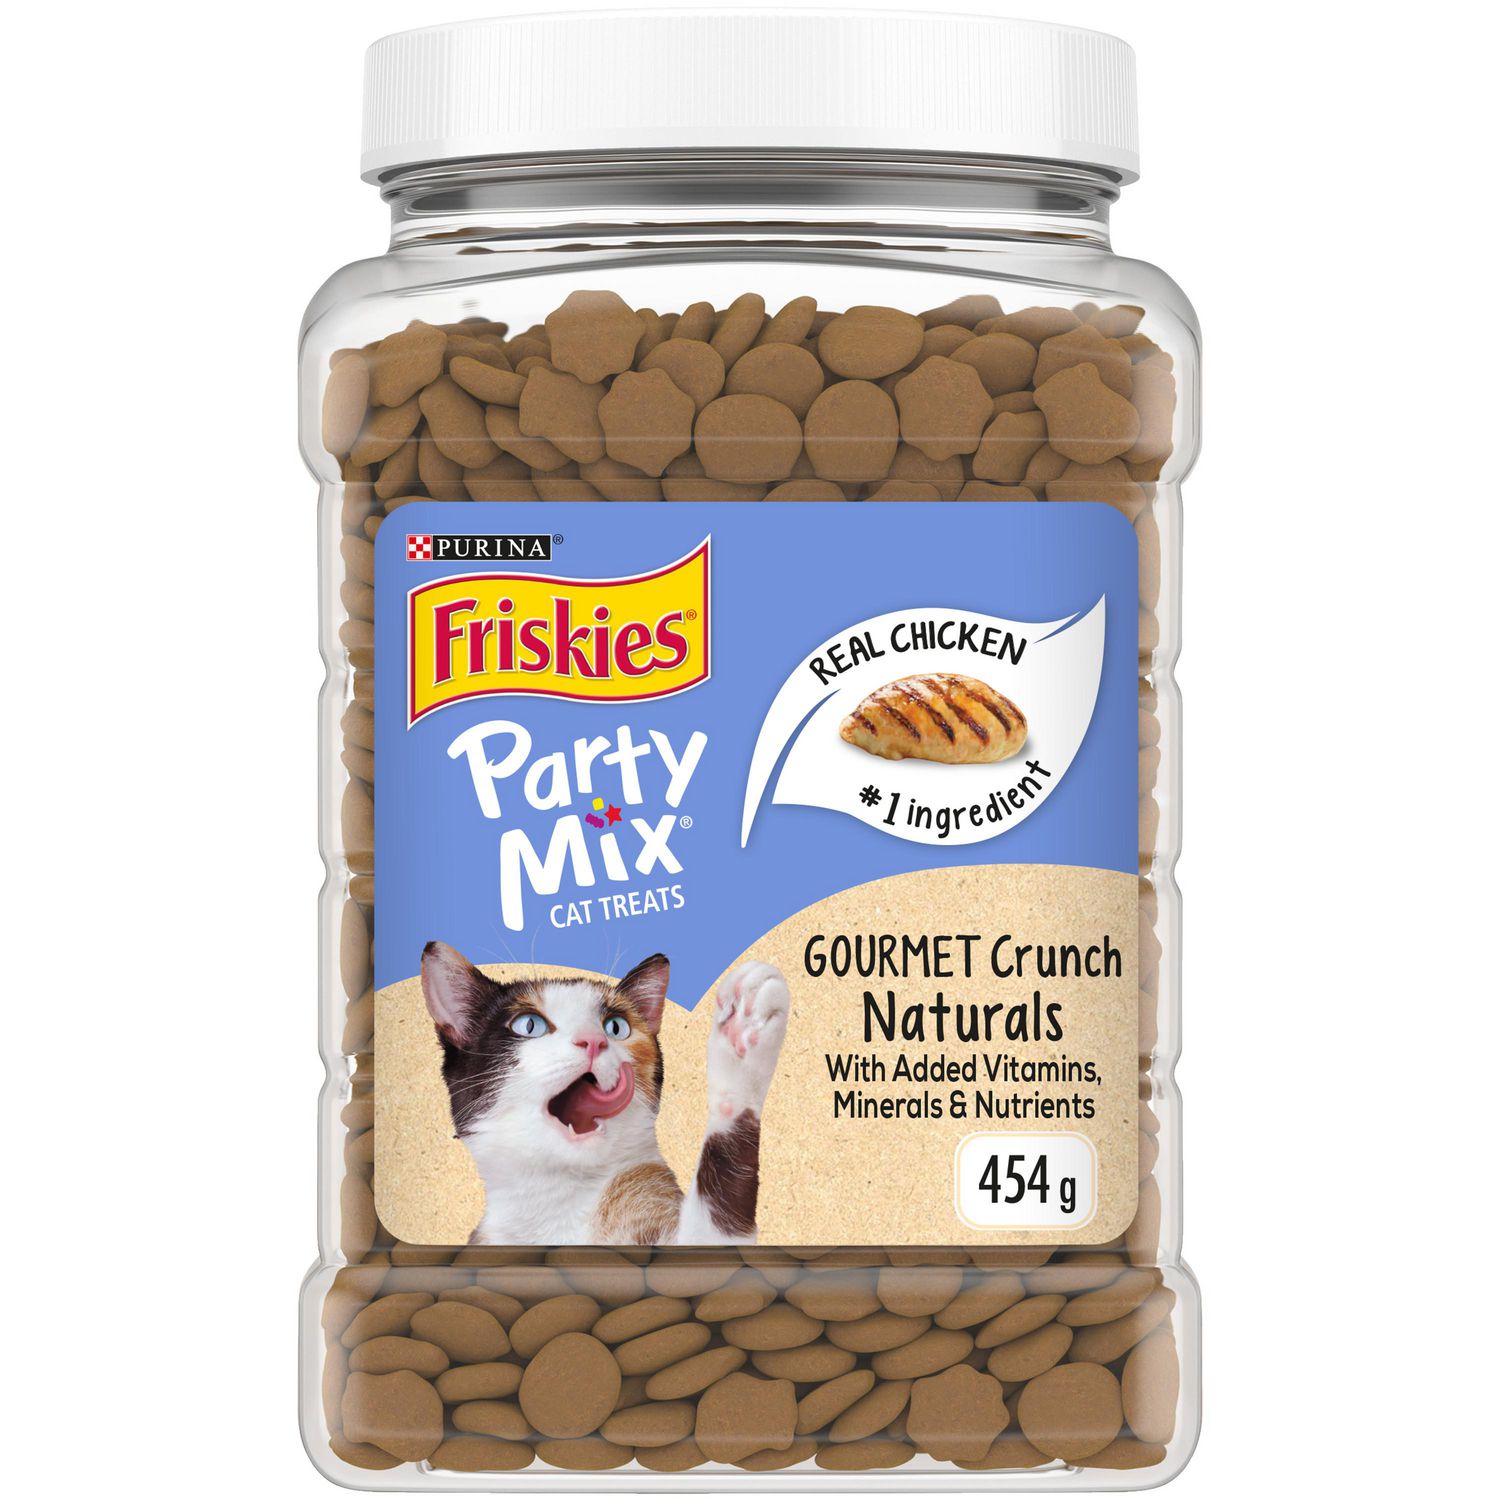 Friskies Party Mix Gourmet Crunch, Natural Cat Treats 454g Walmart Canada